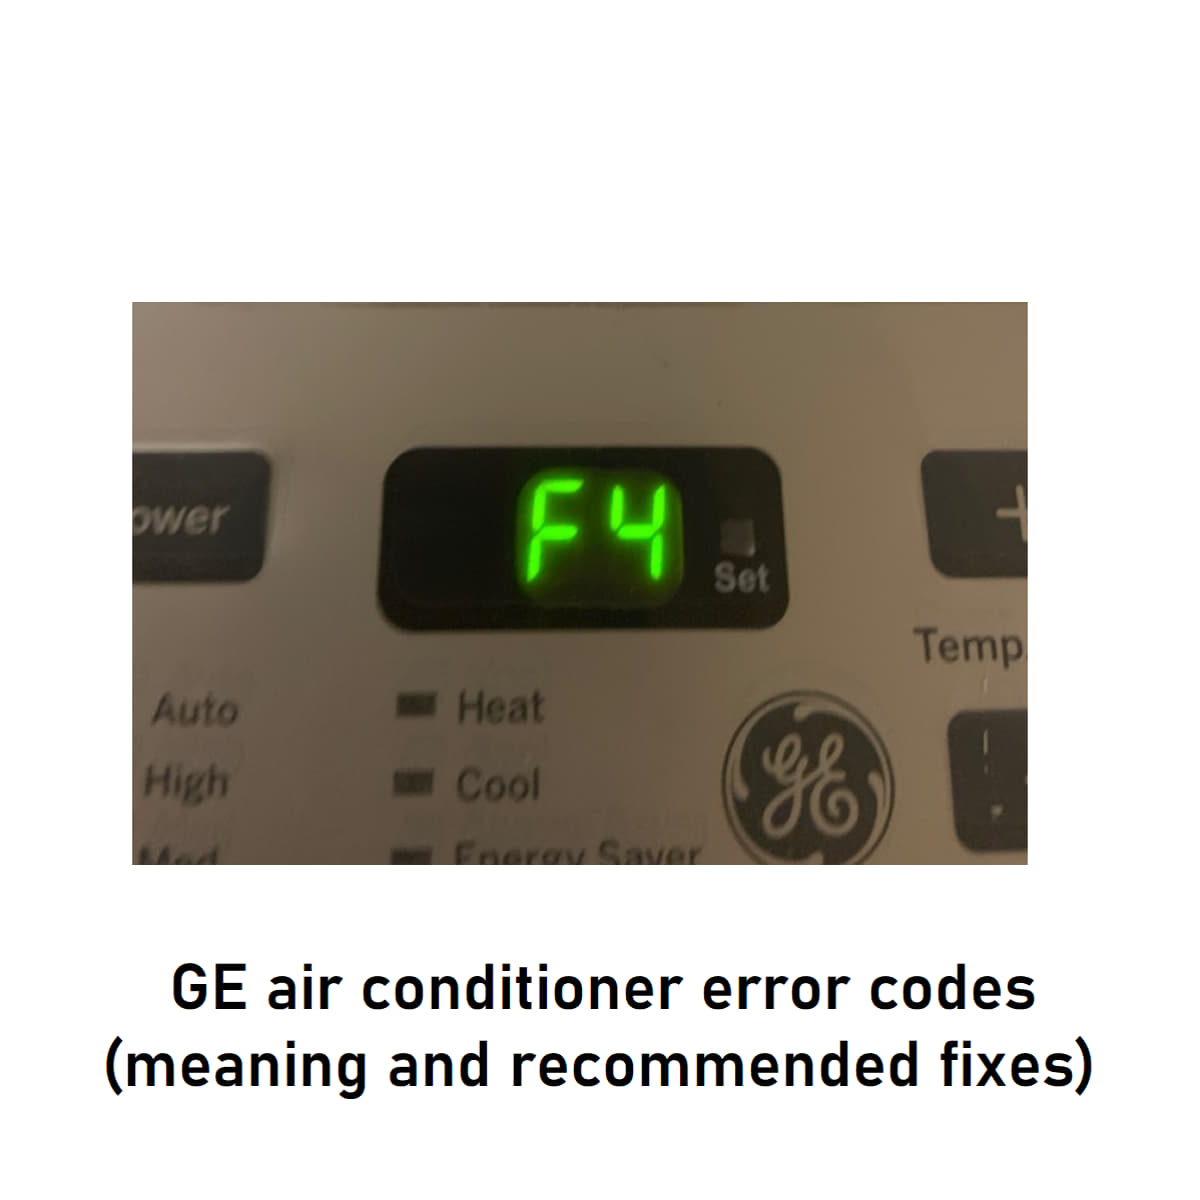 GE air conditioner error codes